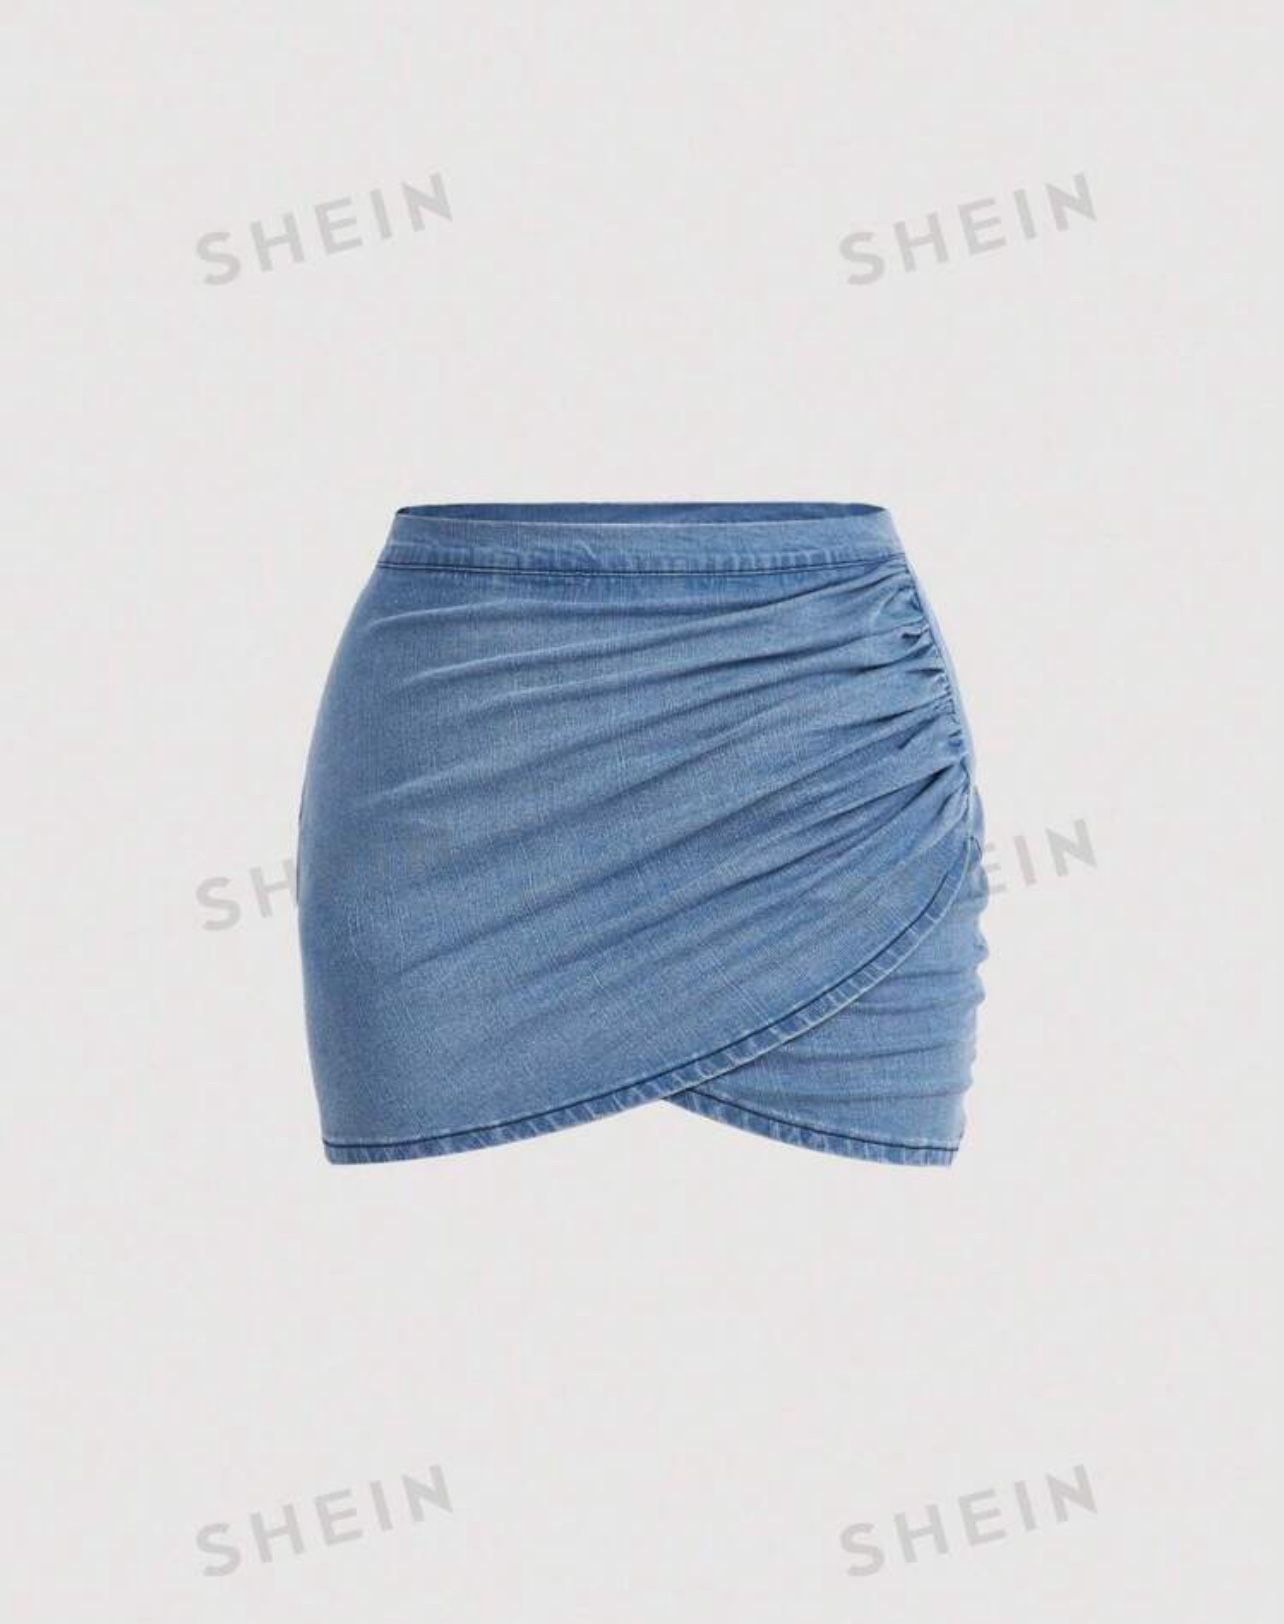 Denim Skirt From SHEIN 